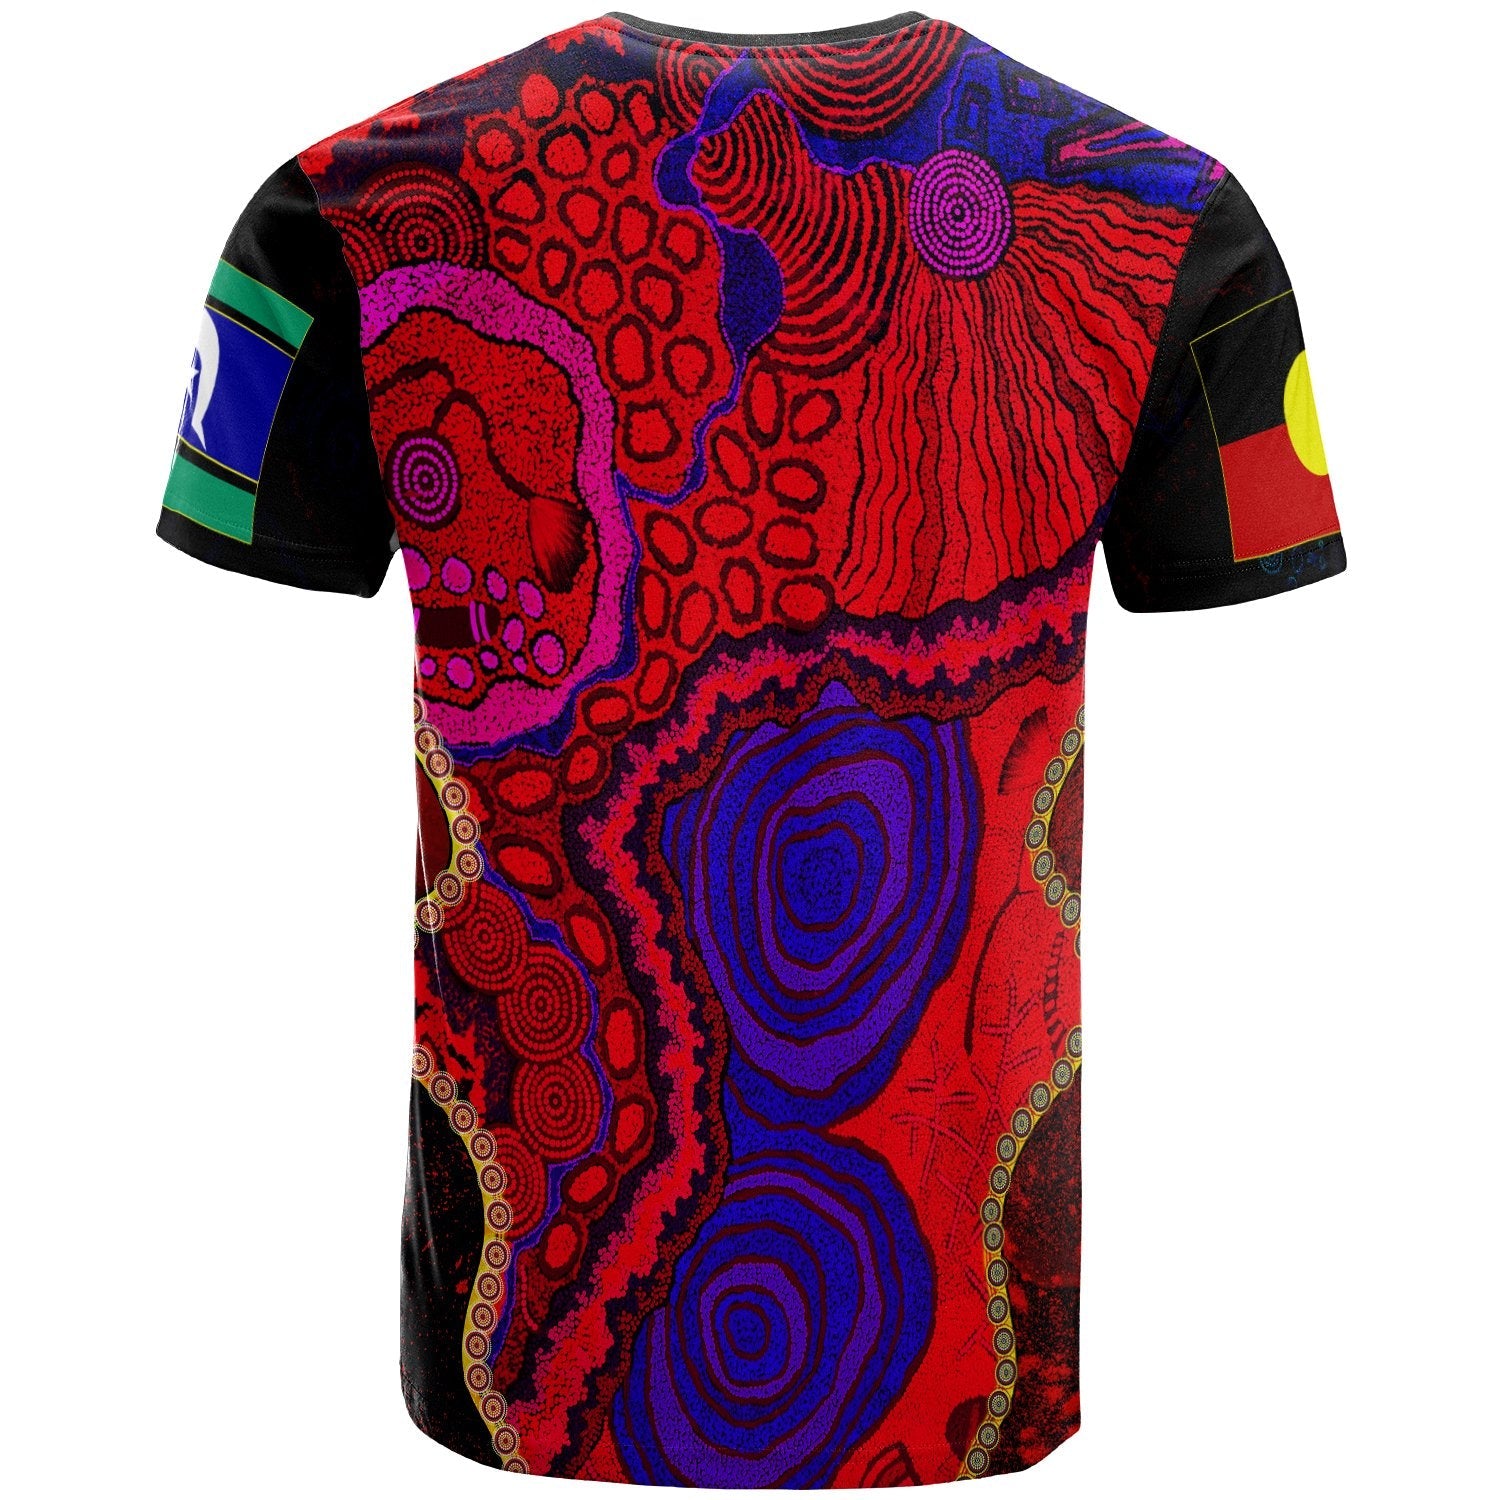 aboriginal-t-shirt-naidoc-week-2020-aboriginal-red-pattern